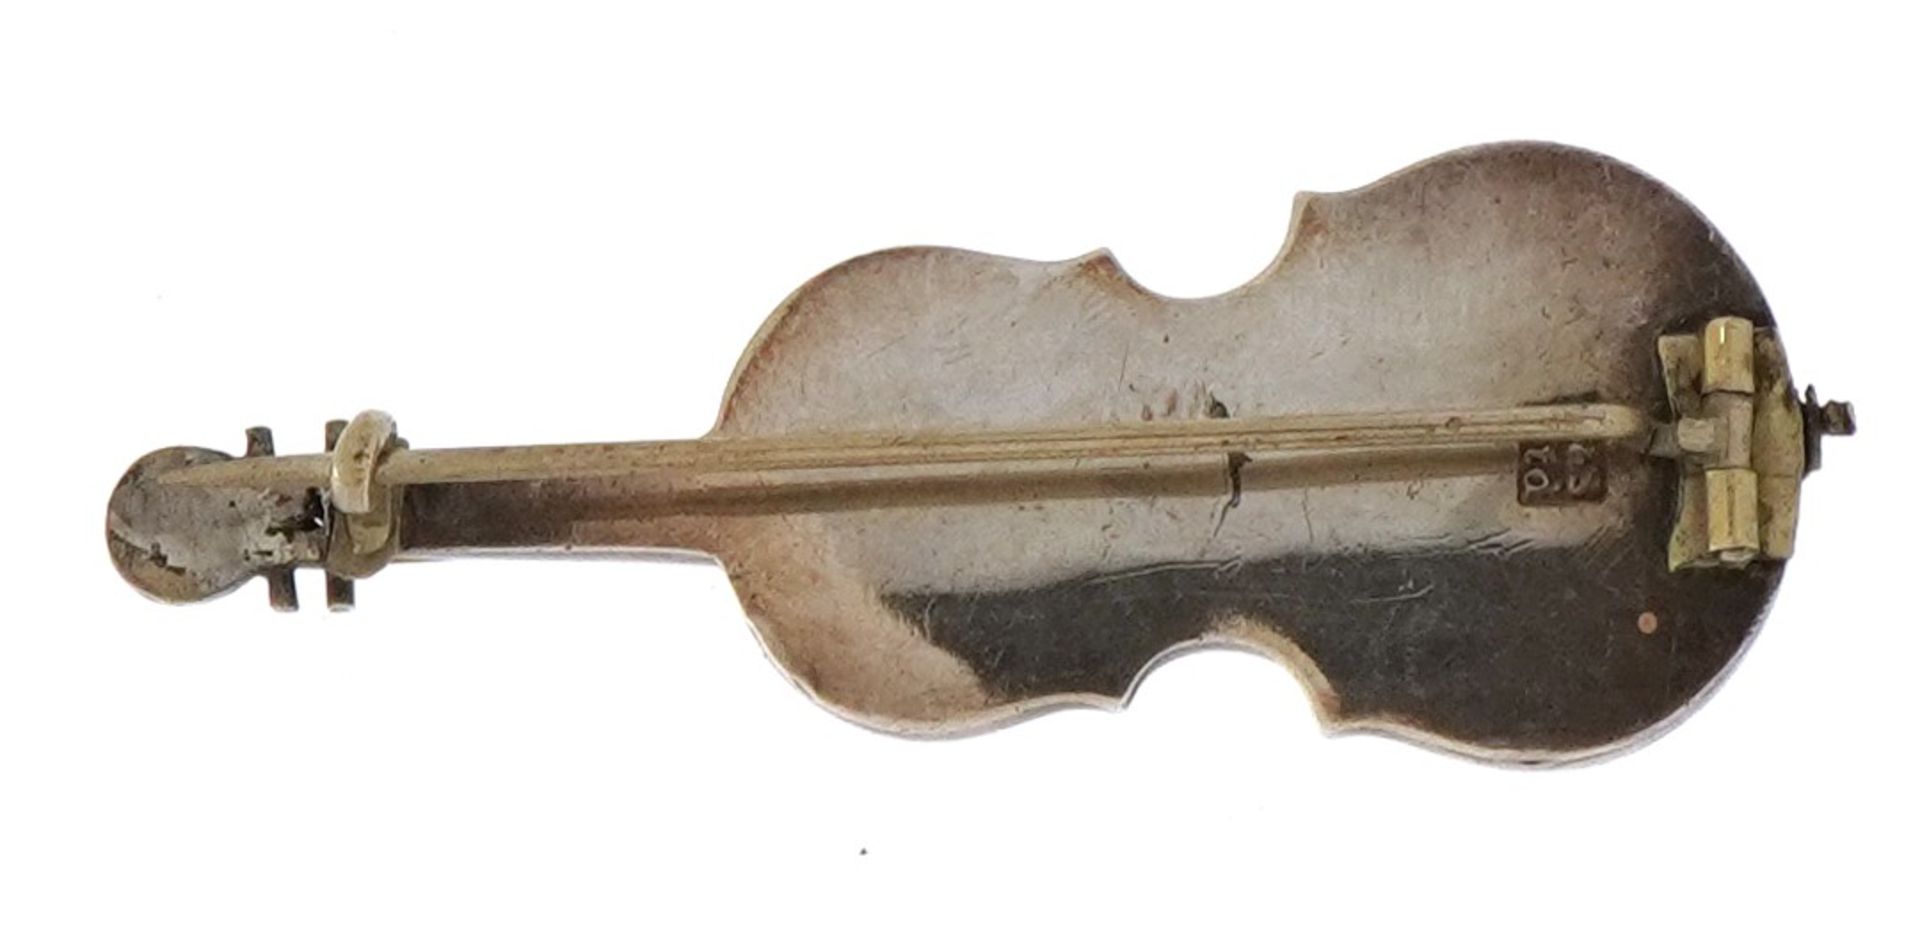 Silver violin brooch stamped Std, 6cm wide, 9.6g - Image 2 of 3